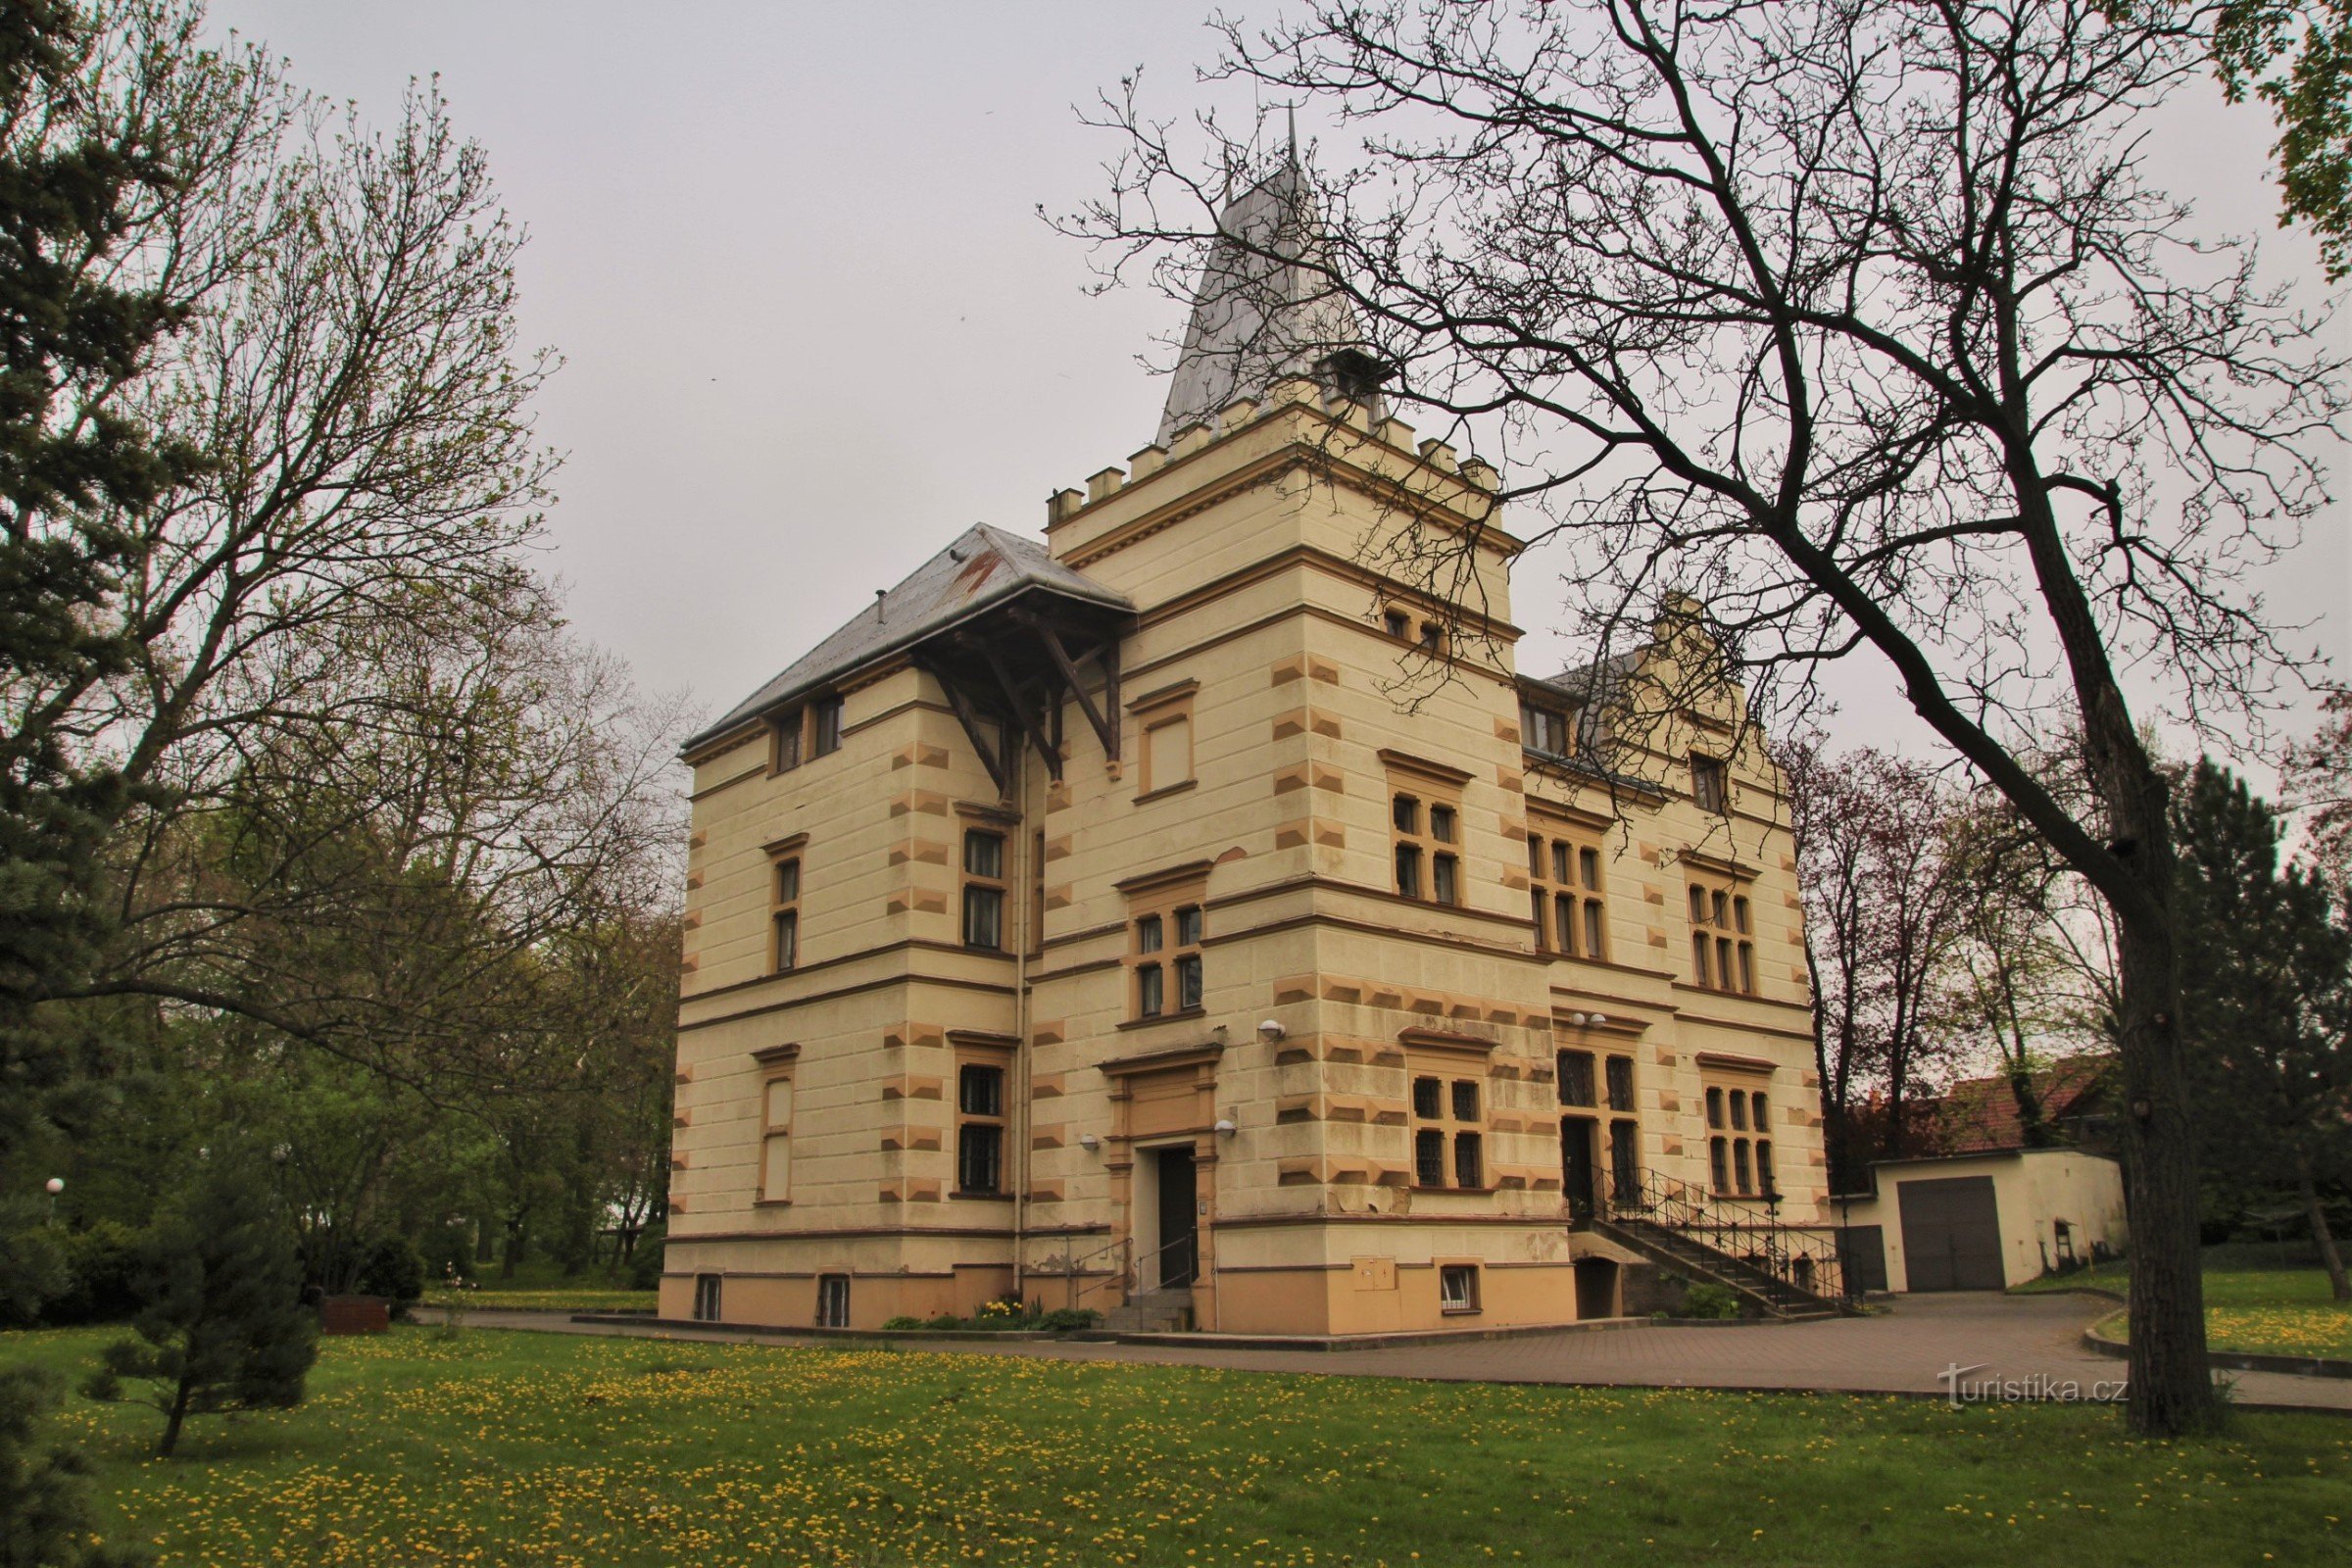 Villa Austerlitz